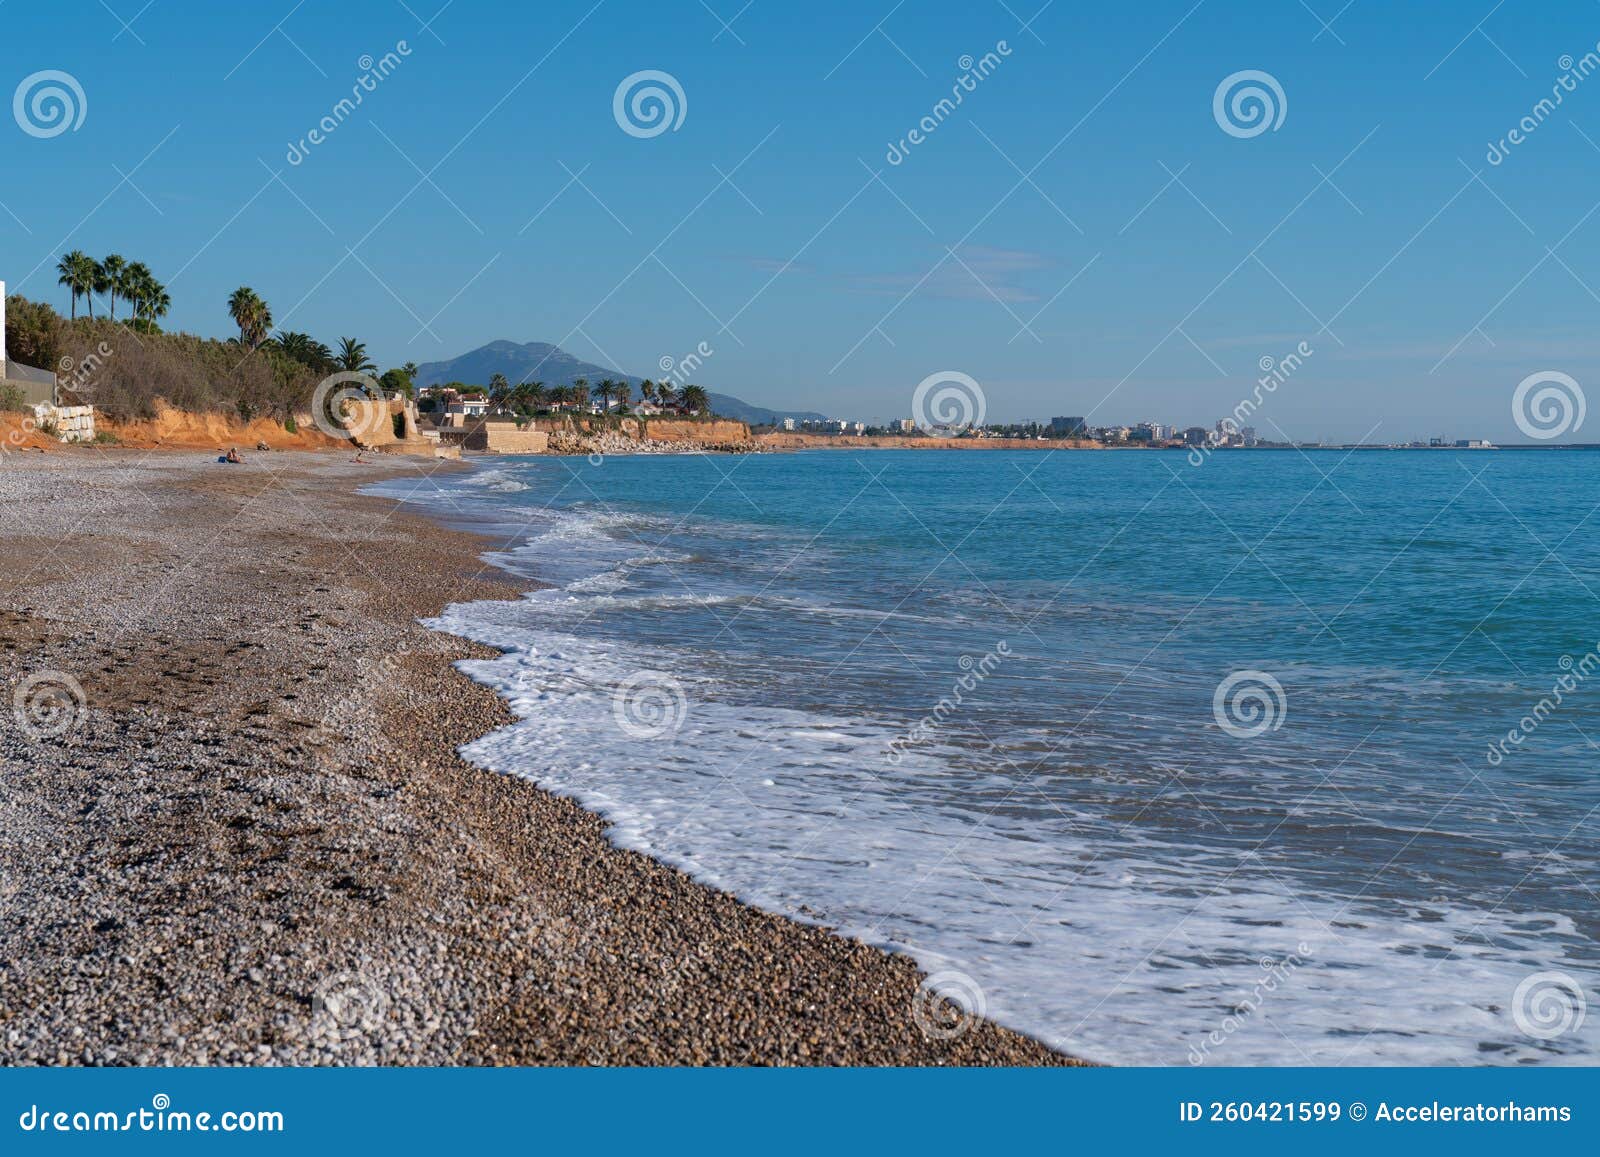 blue sea and sky benicarlo beach spain near alegria del mar camping